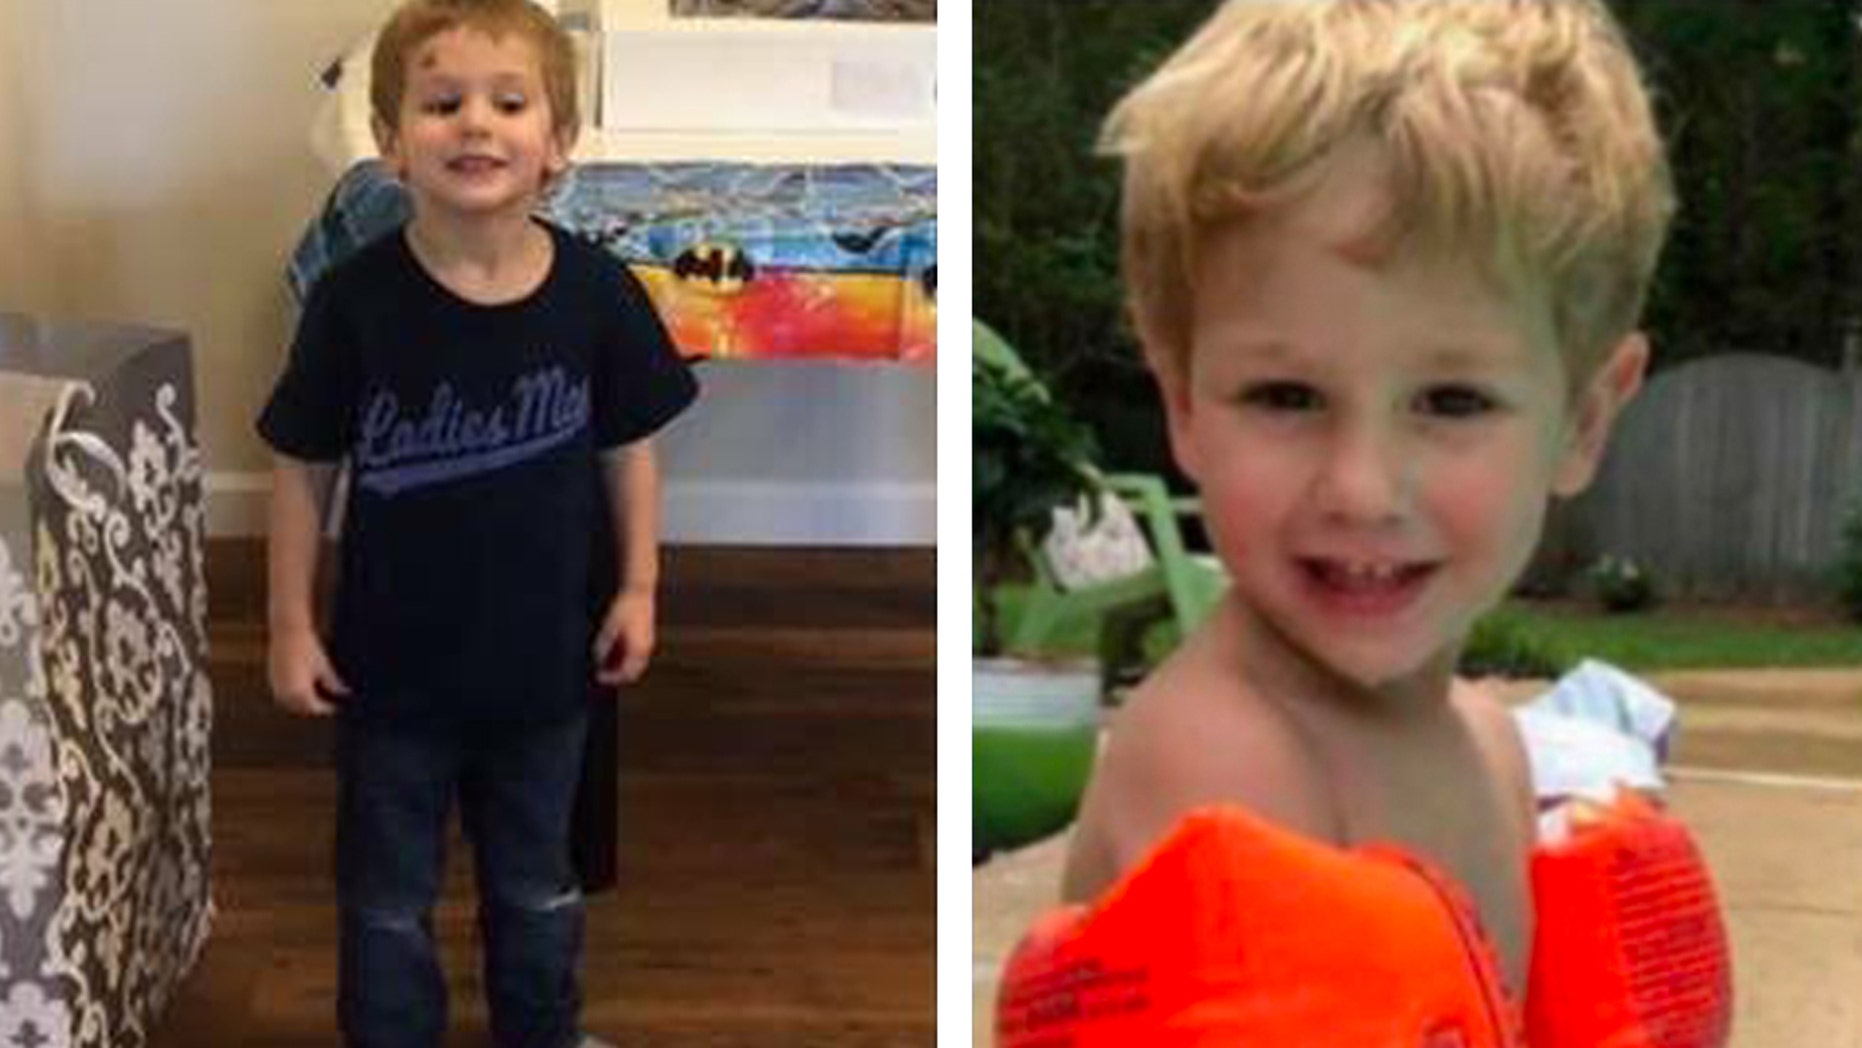 Missing North Carolina boy, 3, found alive, authorities say